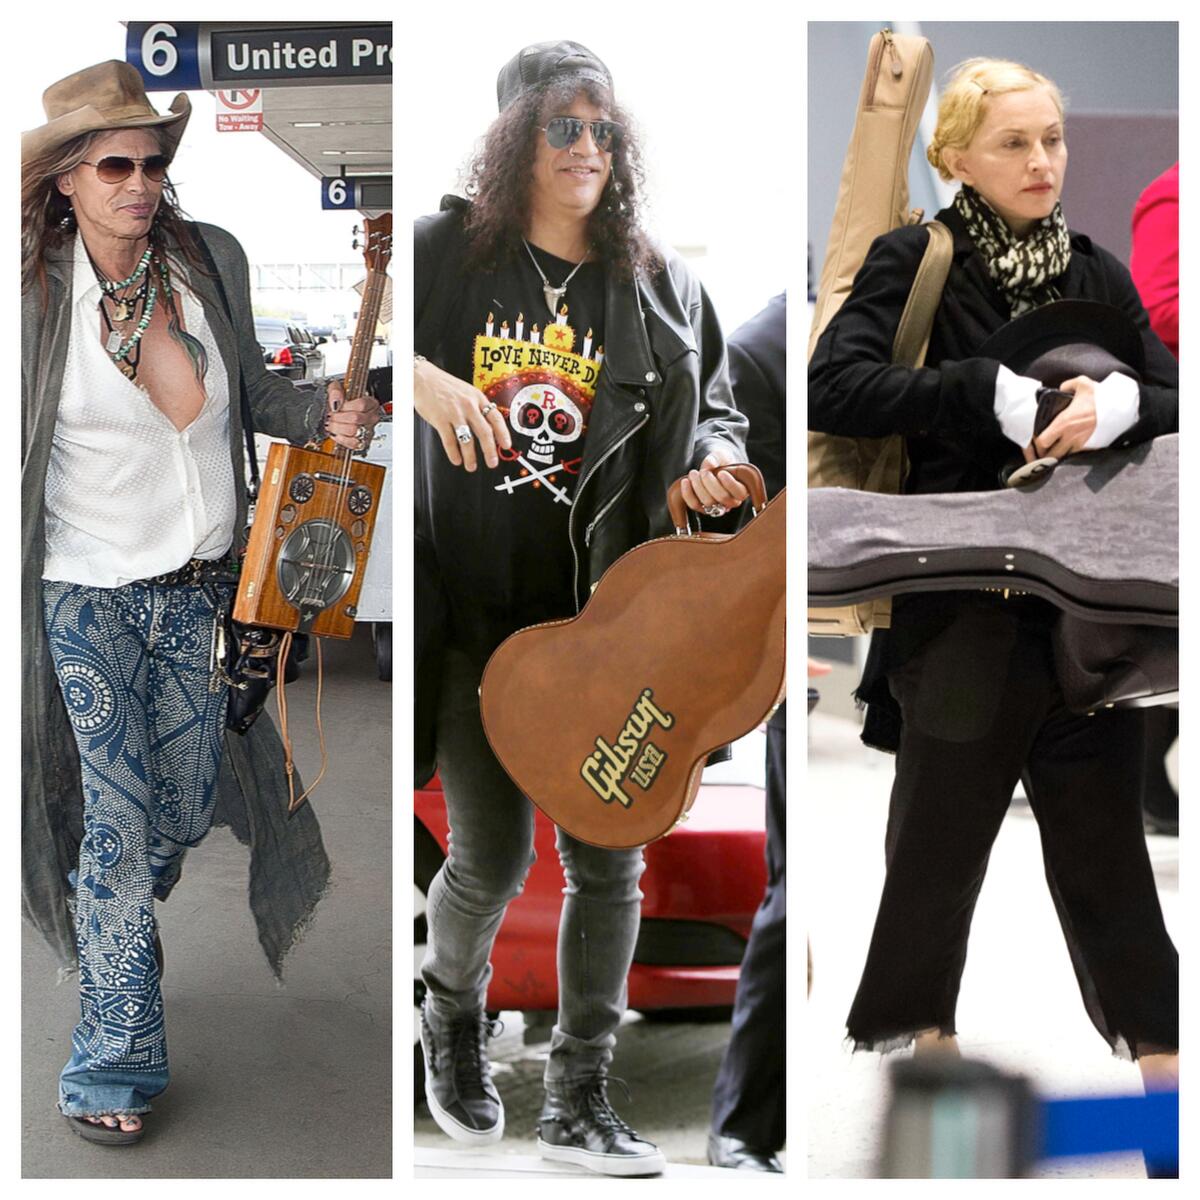 Rock stars with guitars